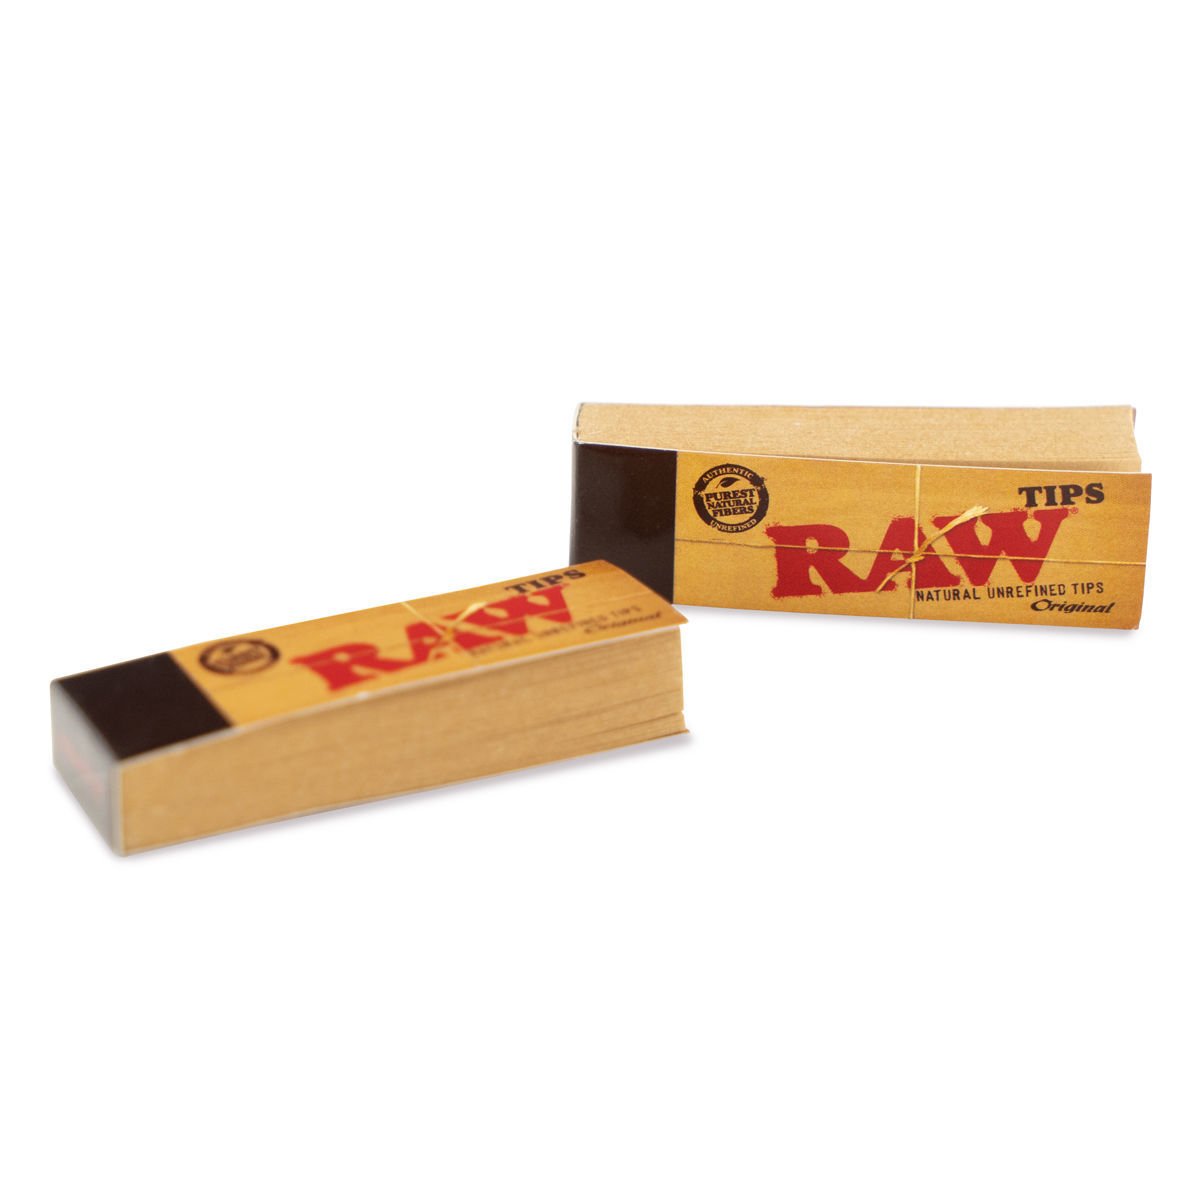 RAW Rolling Tips - Zamnesia